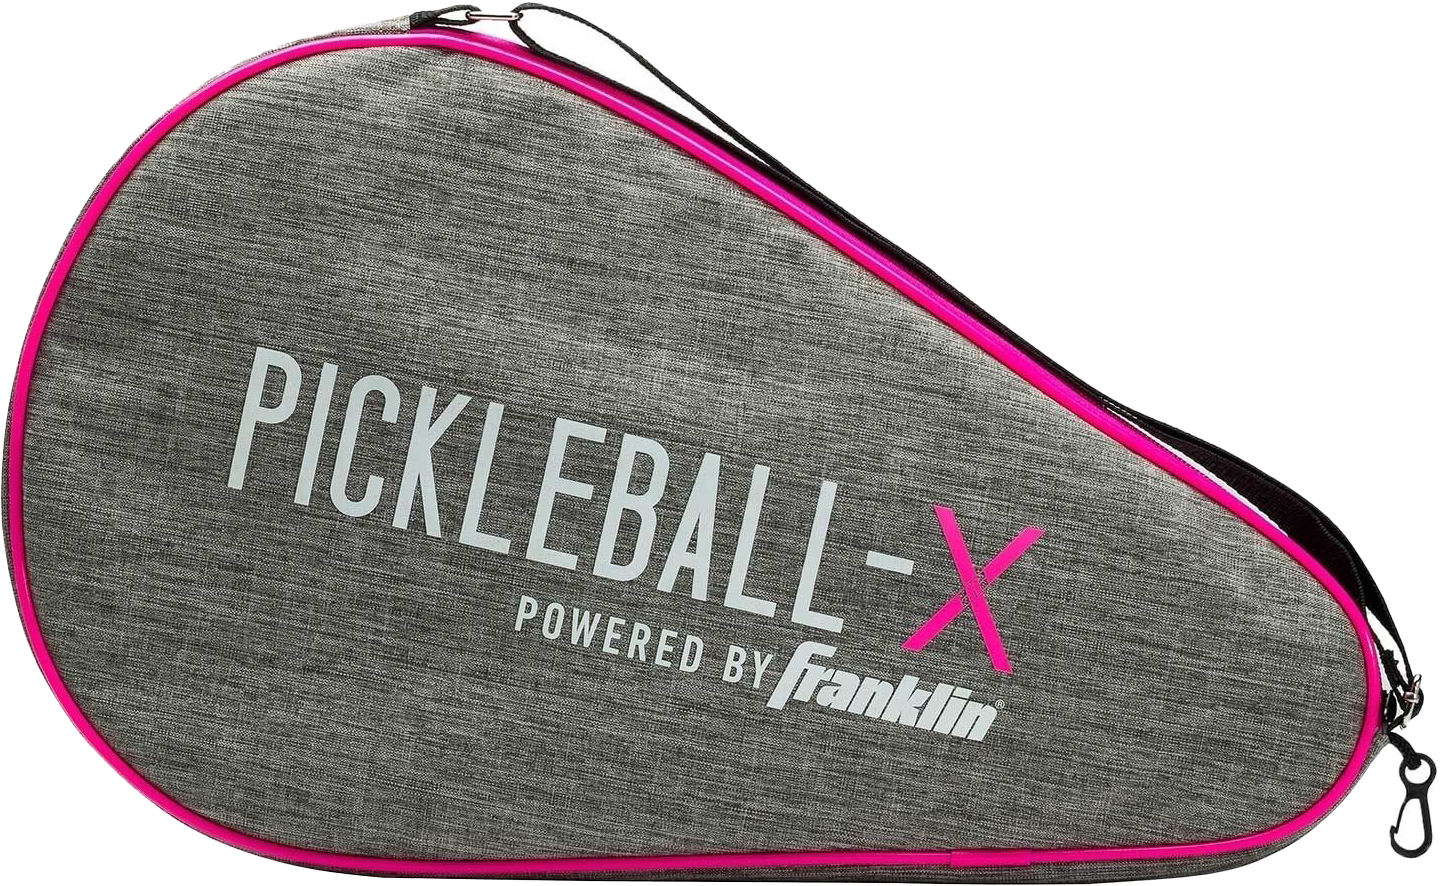 Franklin Pickleball Paddle Bag Pickleball Bag Pink